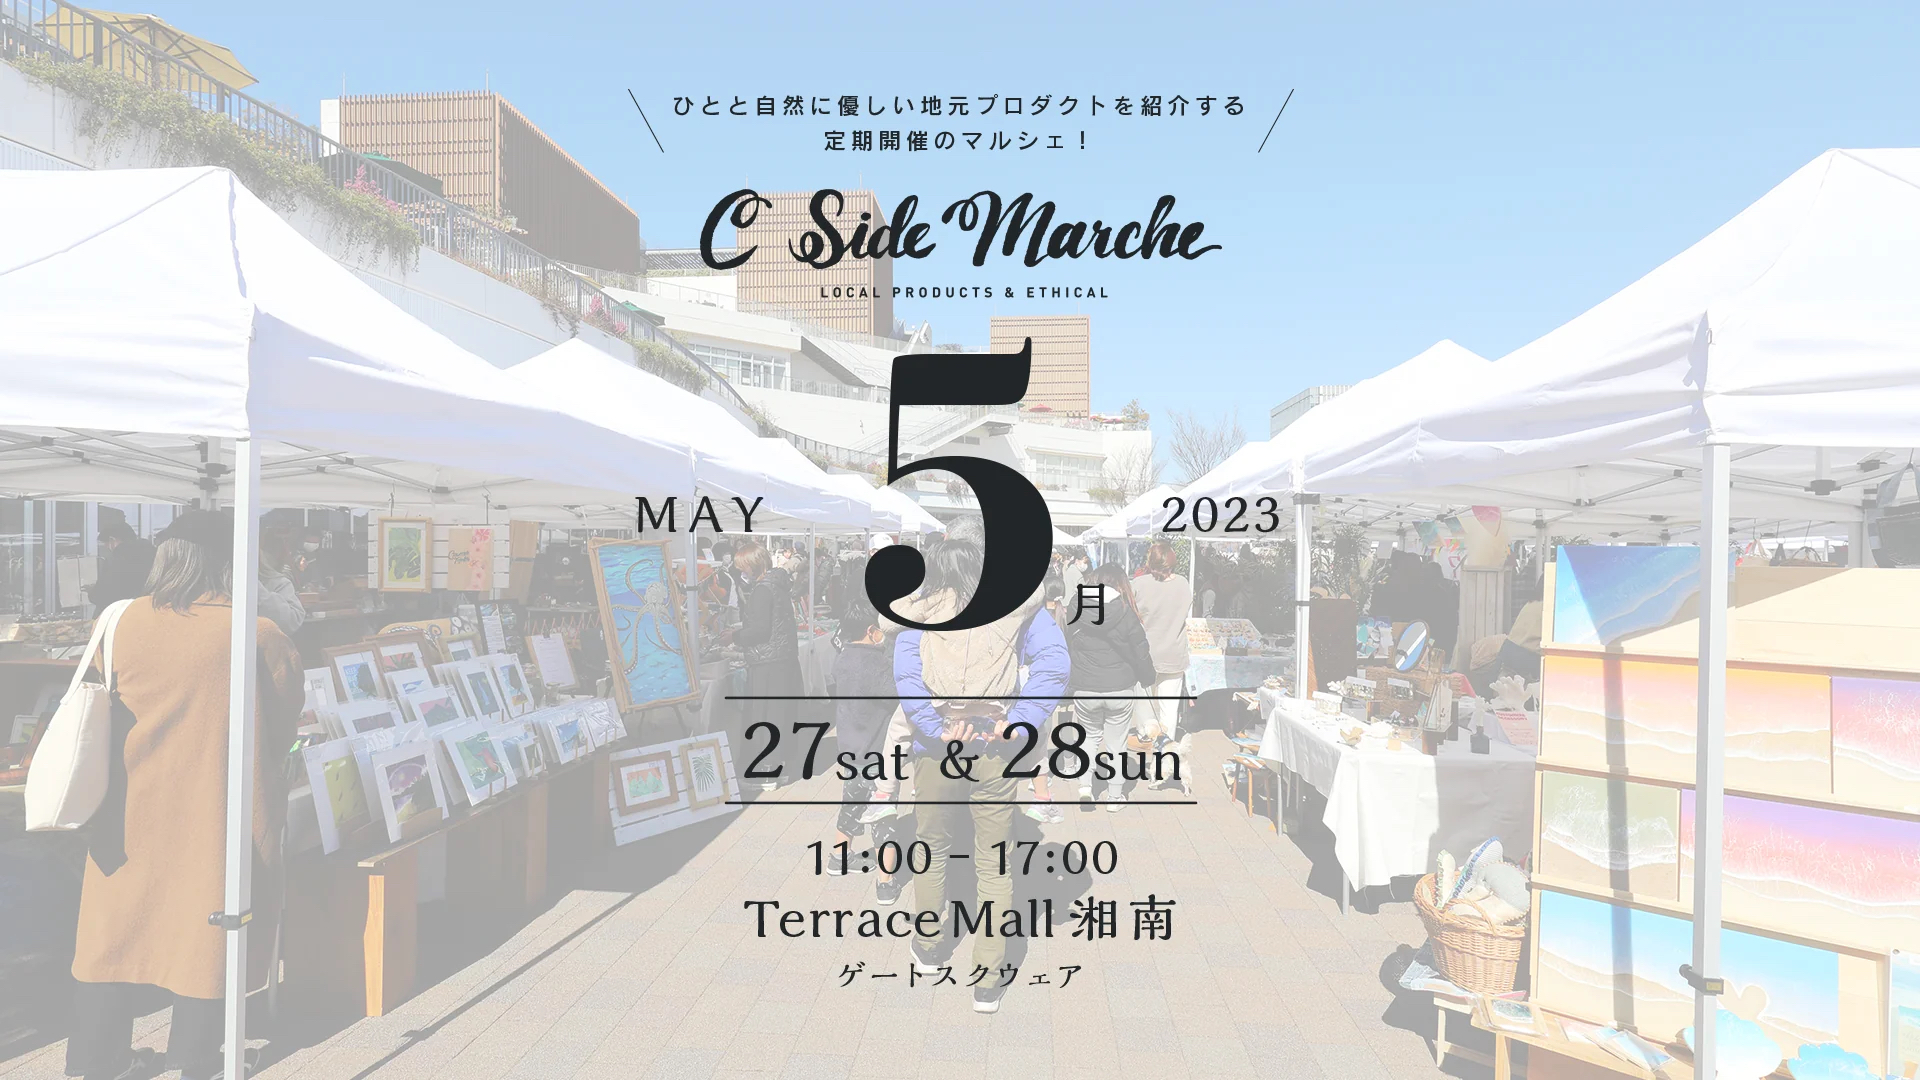 surfers《C Side Marche出店のお知らせ》 5/27(土)・28日(日)